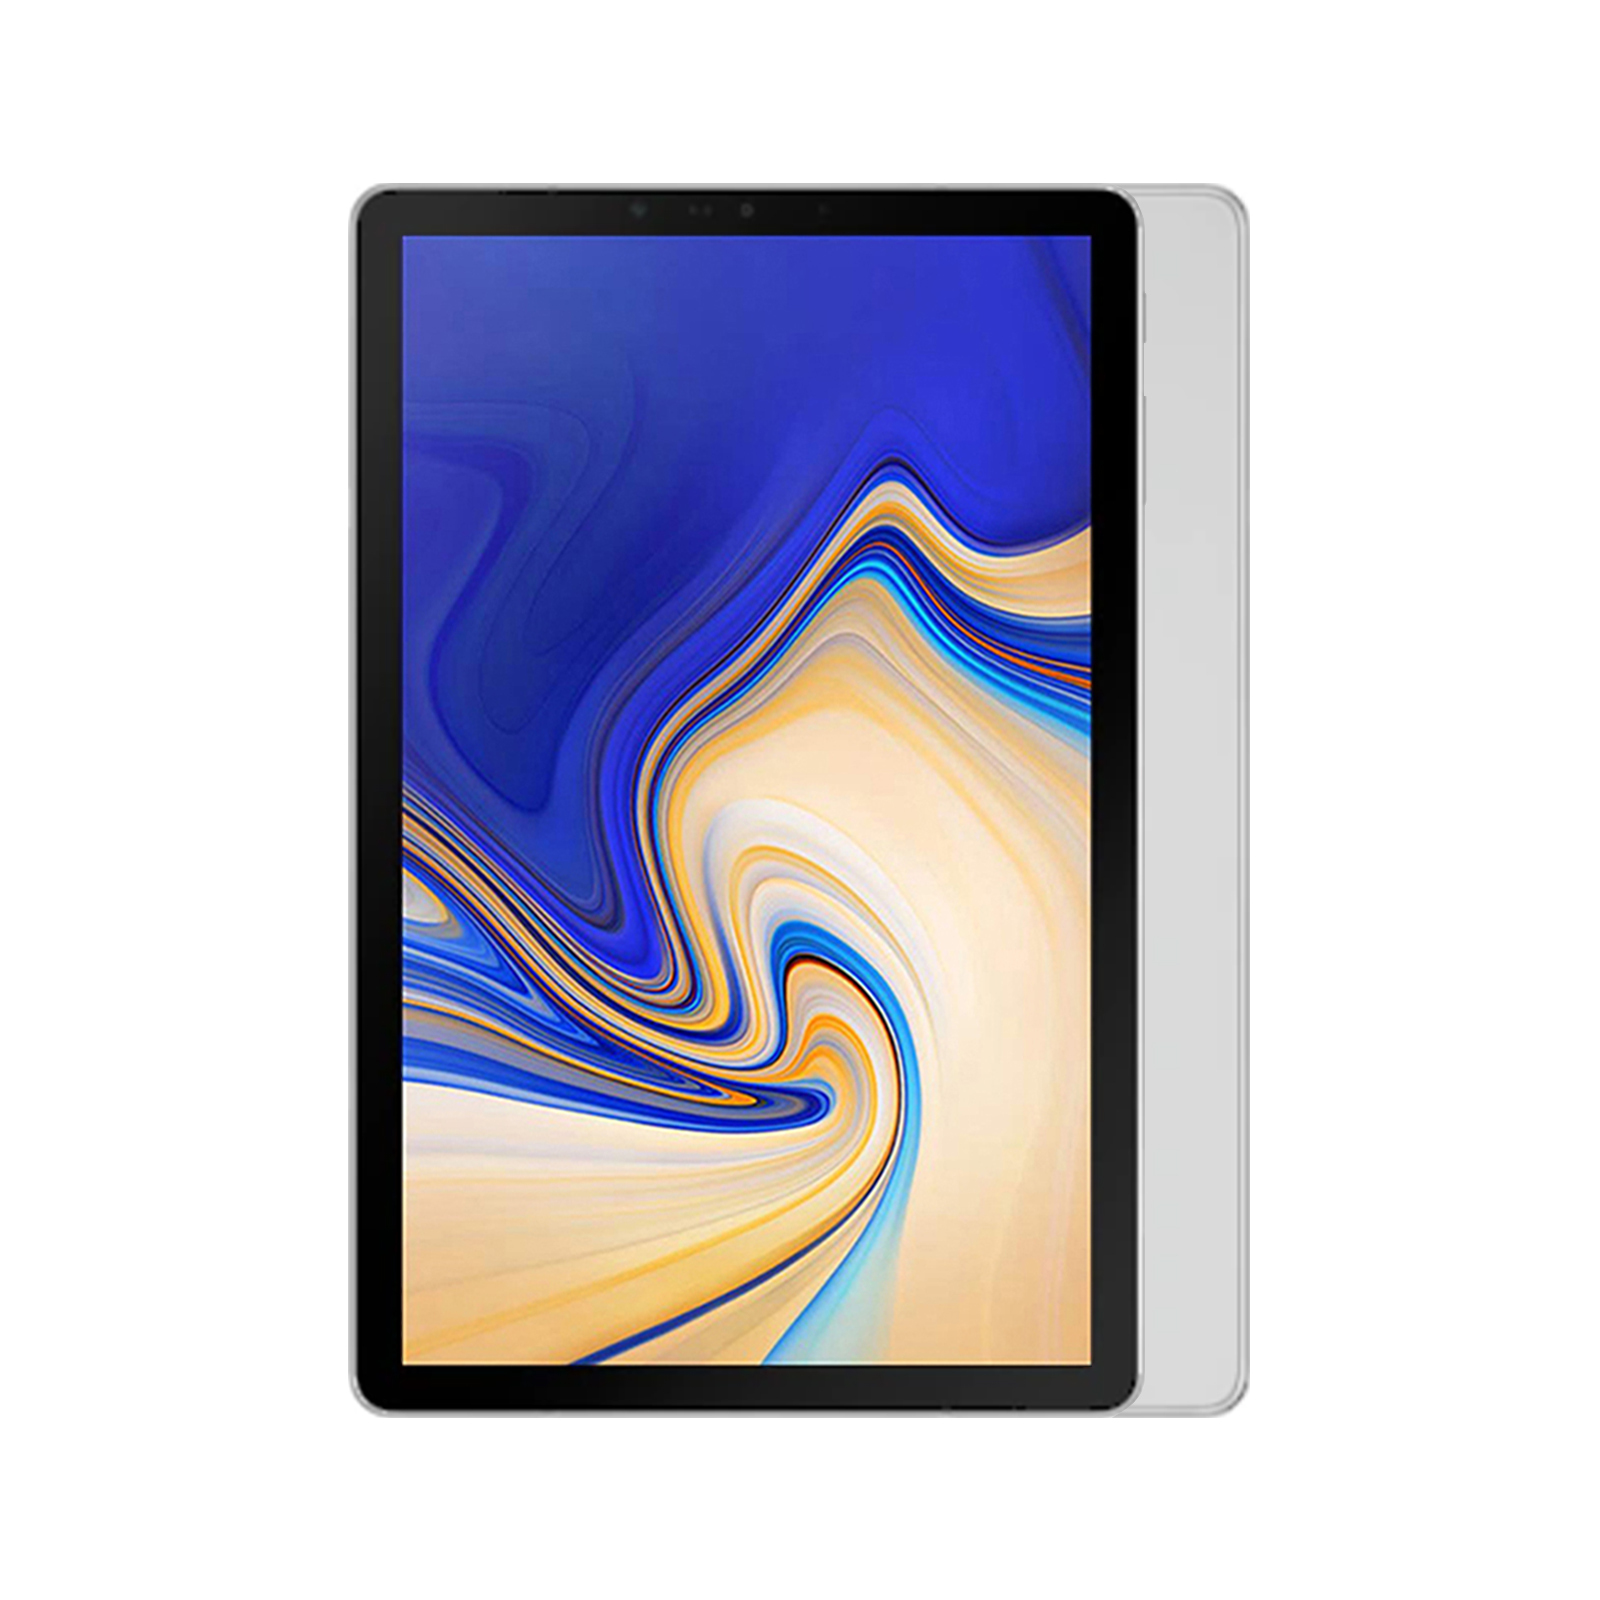 Samsung Galaxy Tab S4 (T835) [WiFi/4G] [64GB] [White] [Very Good]